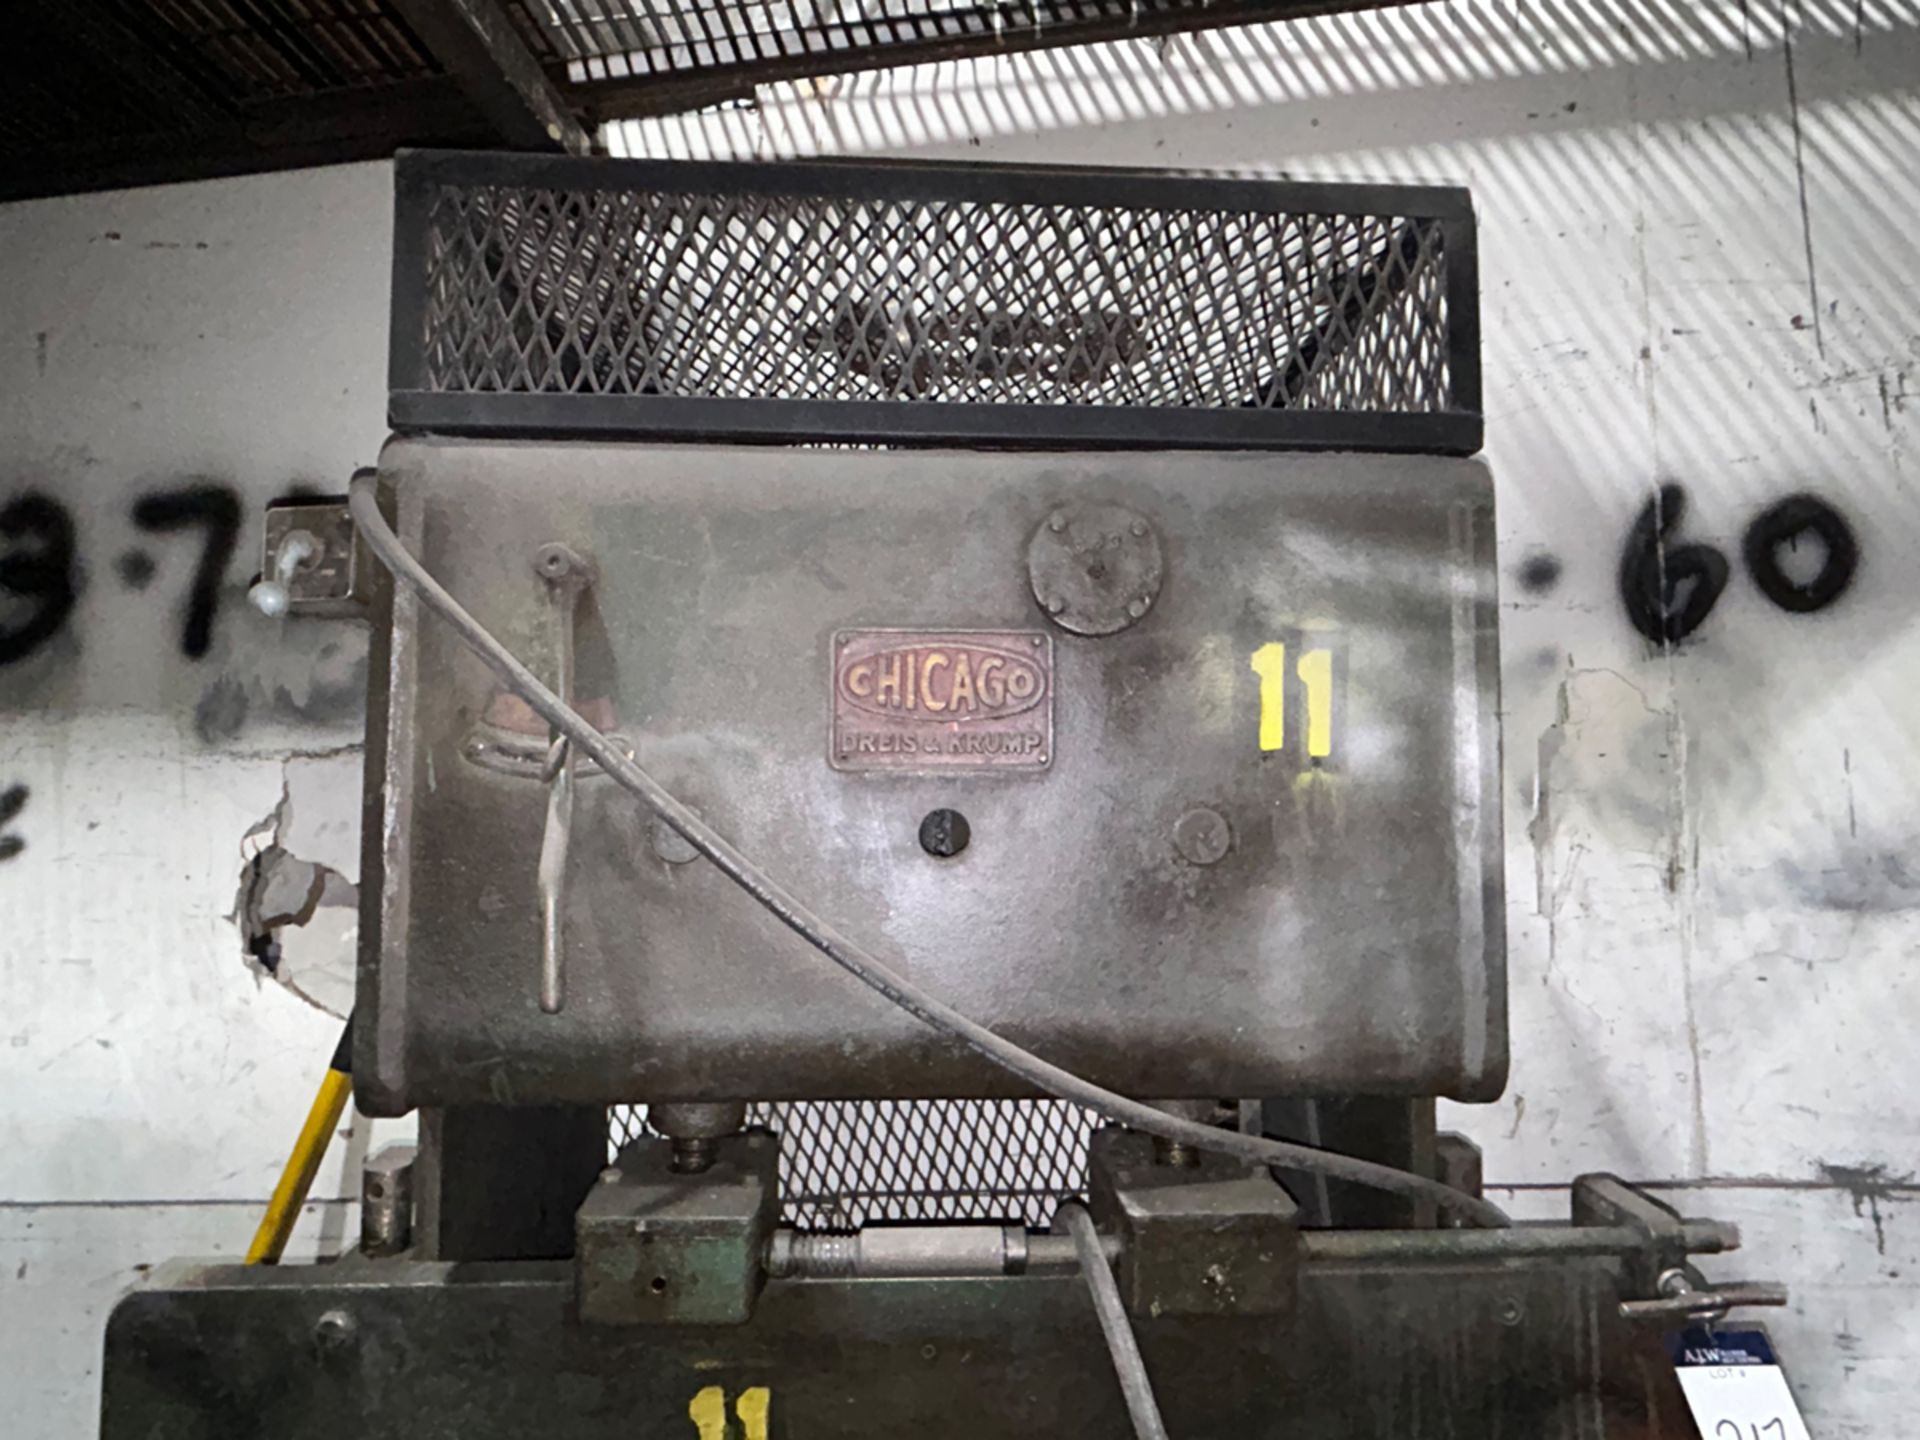 Chicago 48" 15-Ton Mechanical Press Brake - Image 2 of 7